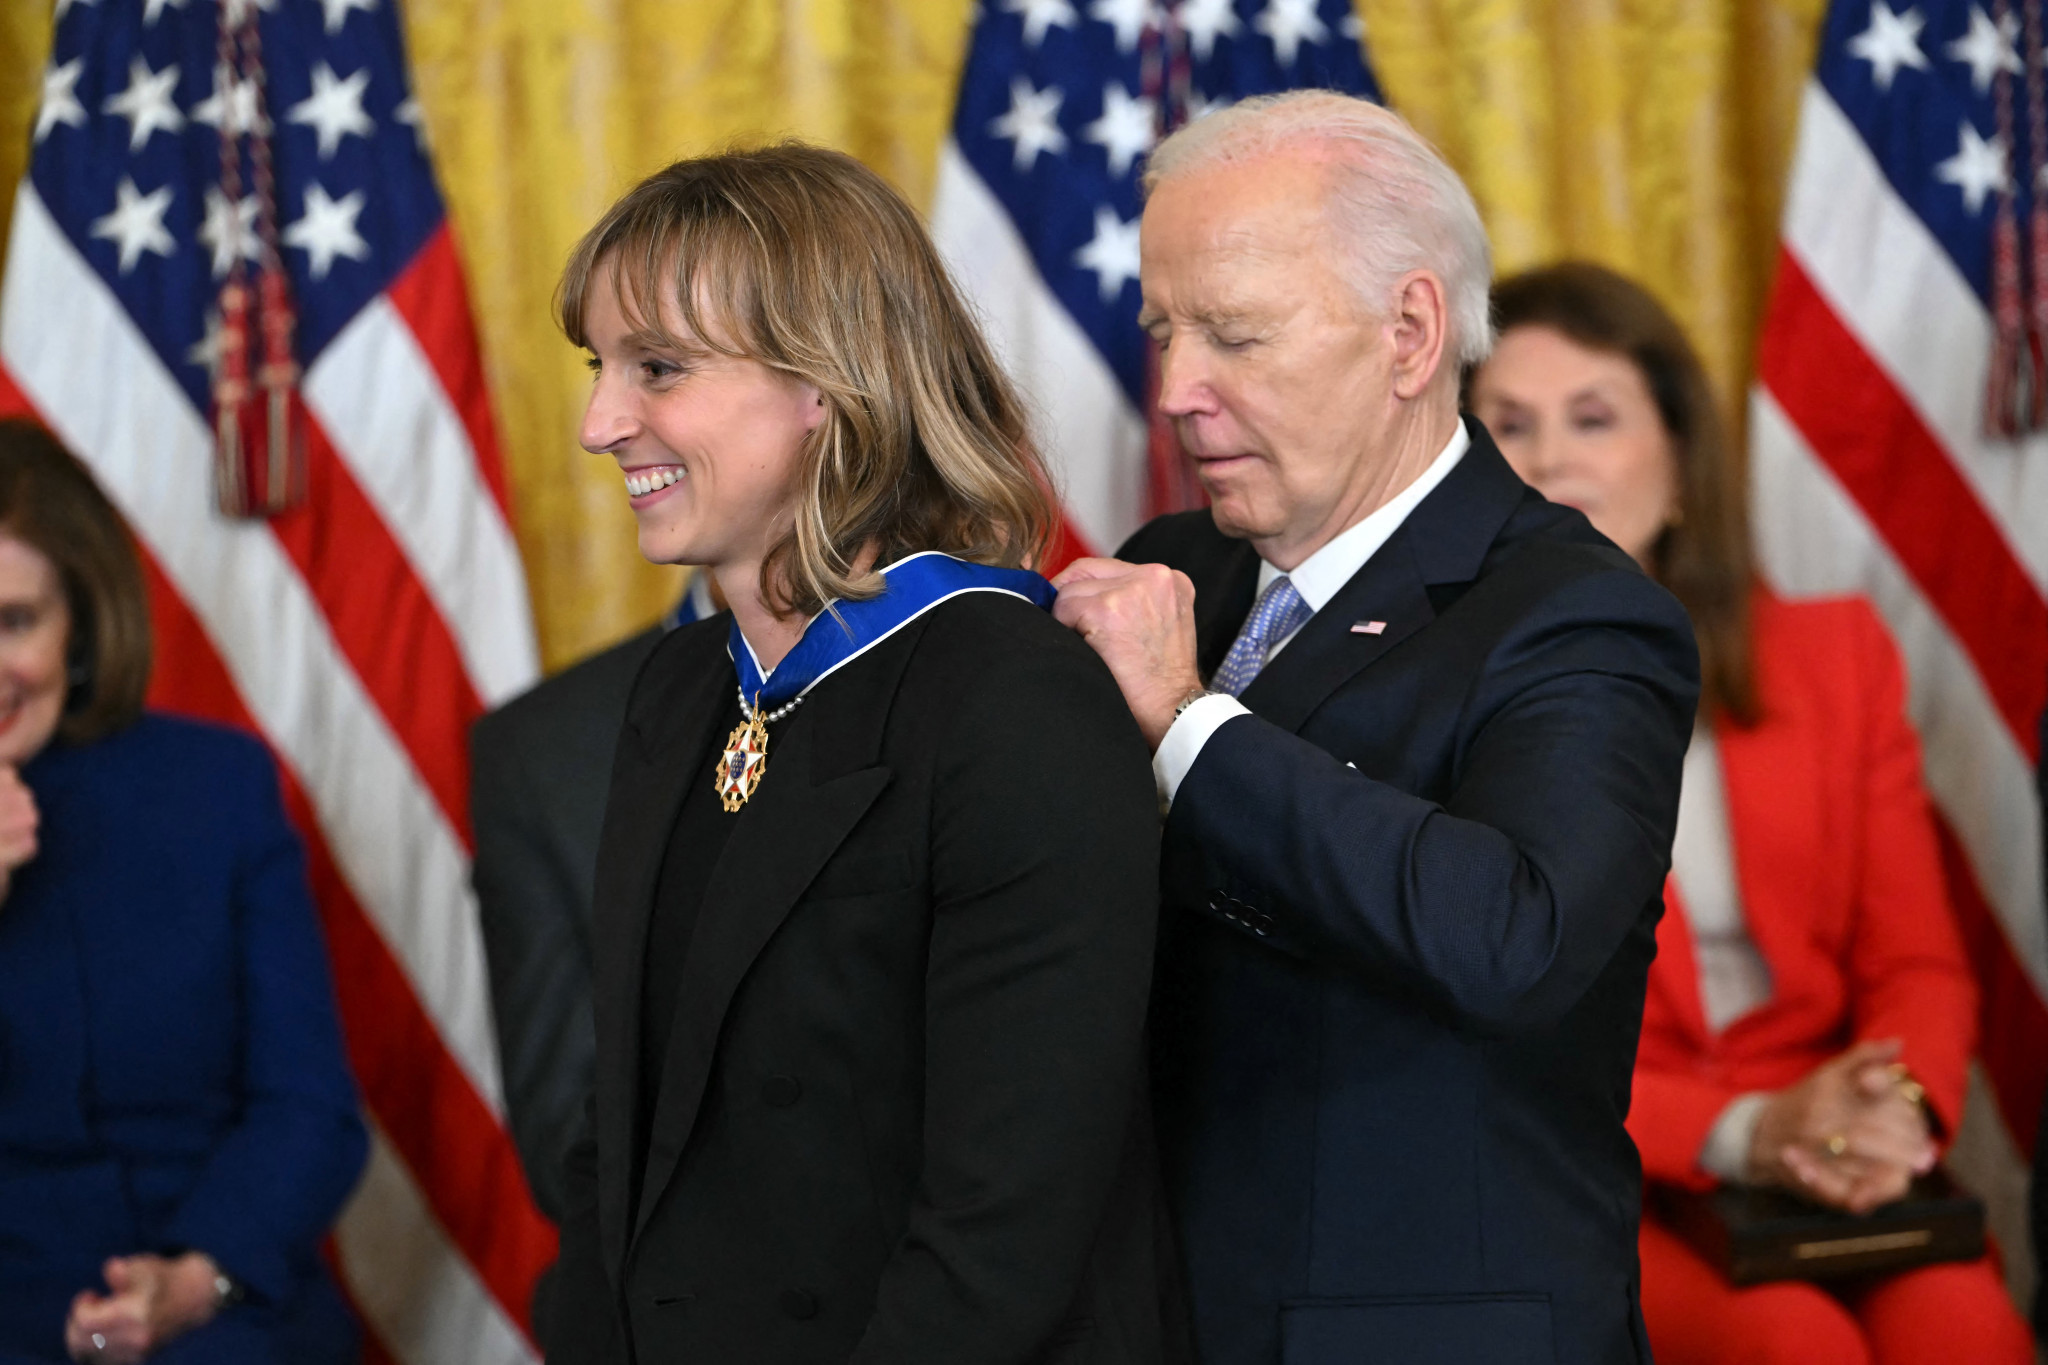 Olympic swimmer Ledecky was awarded the Presidential Medal of Freedom by US President Joe Biden. GETTY IMAGES